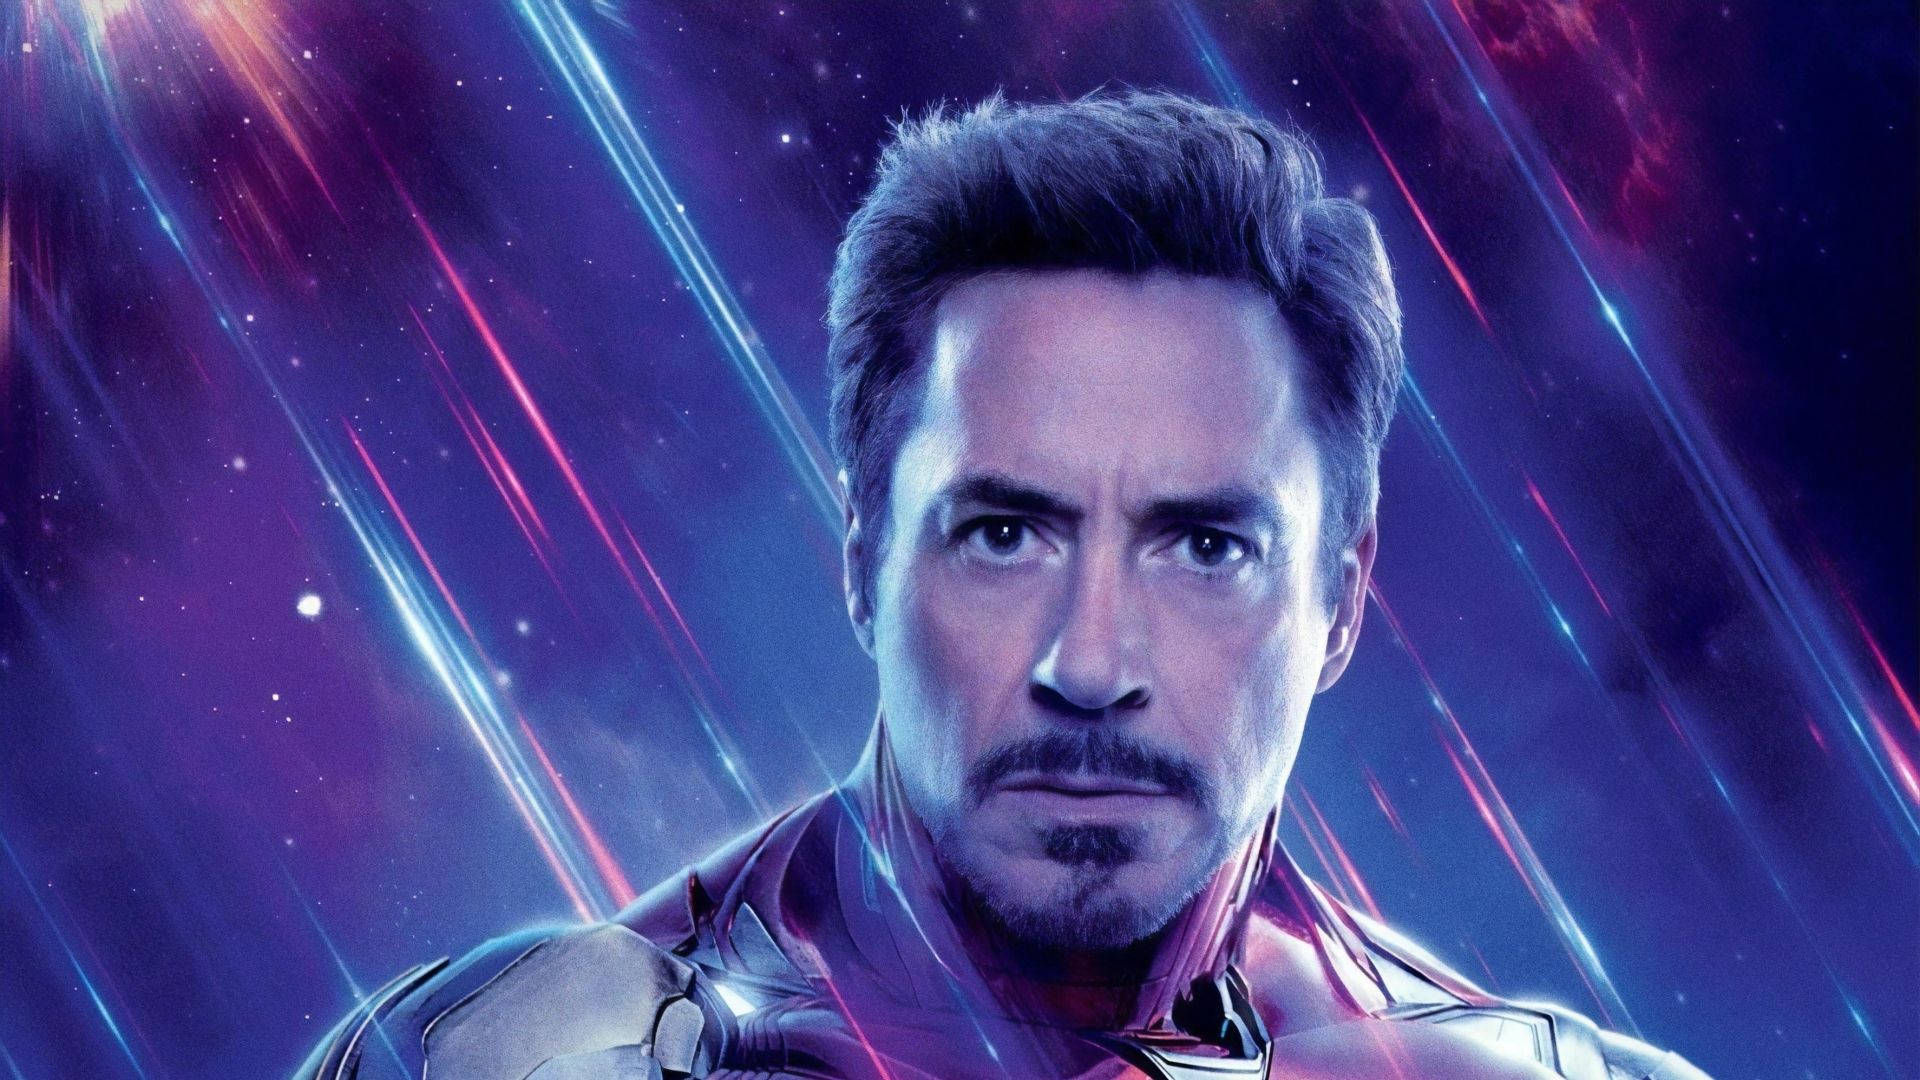 1080p Hd Iron Man Endgame Movie Poster Background